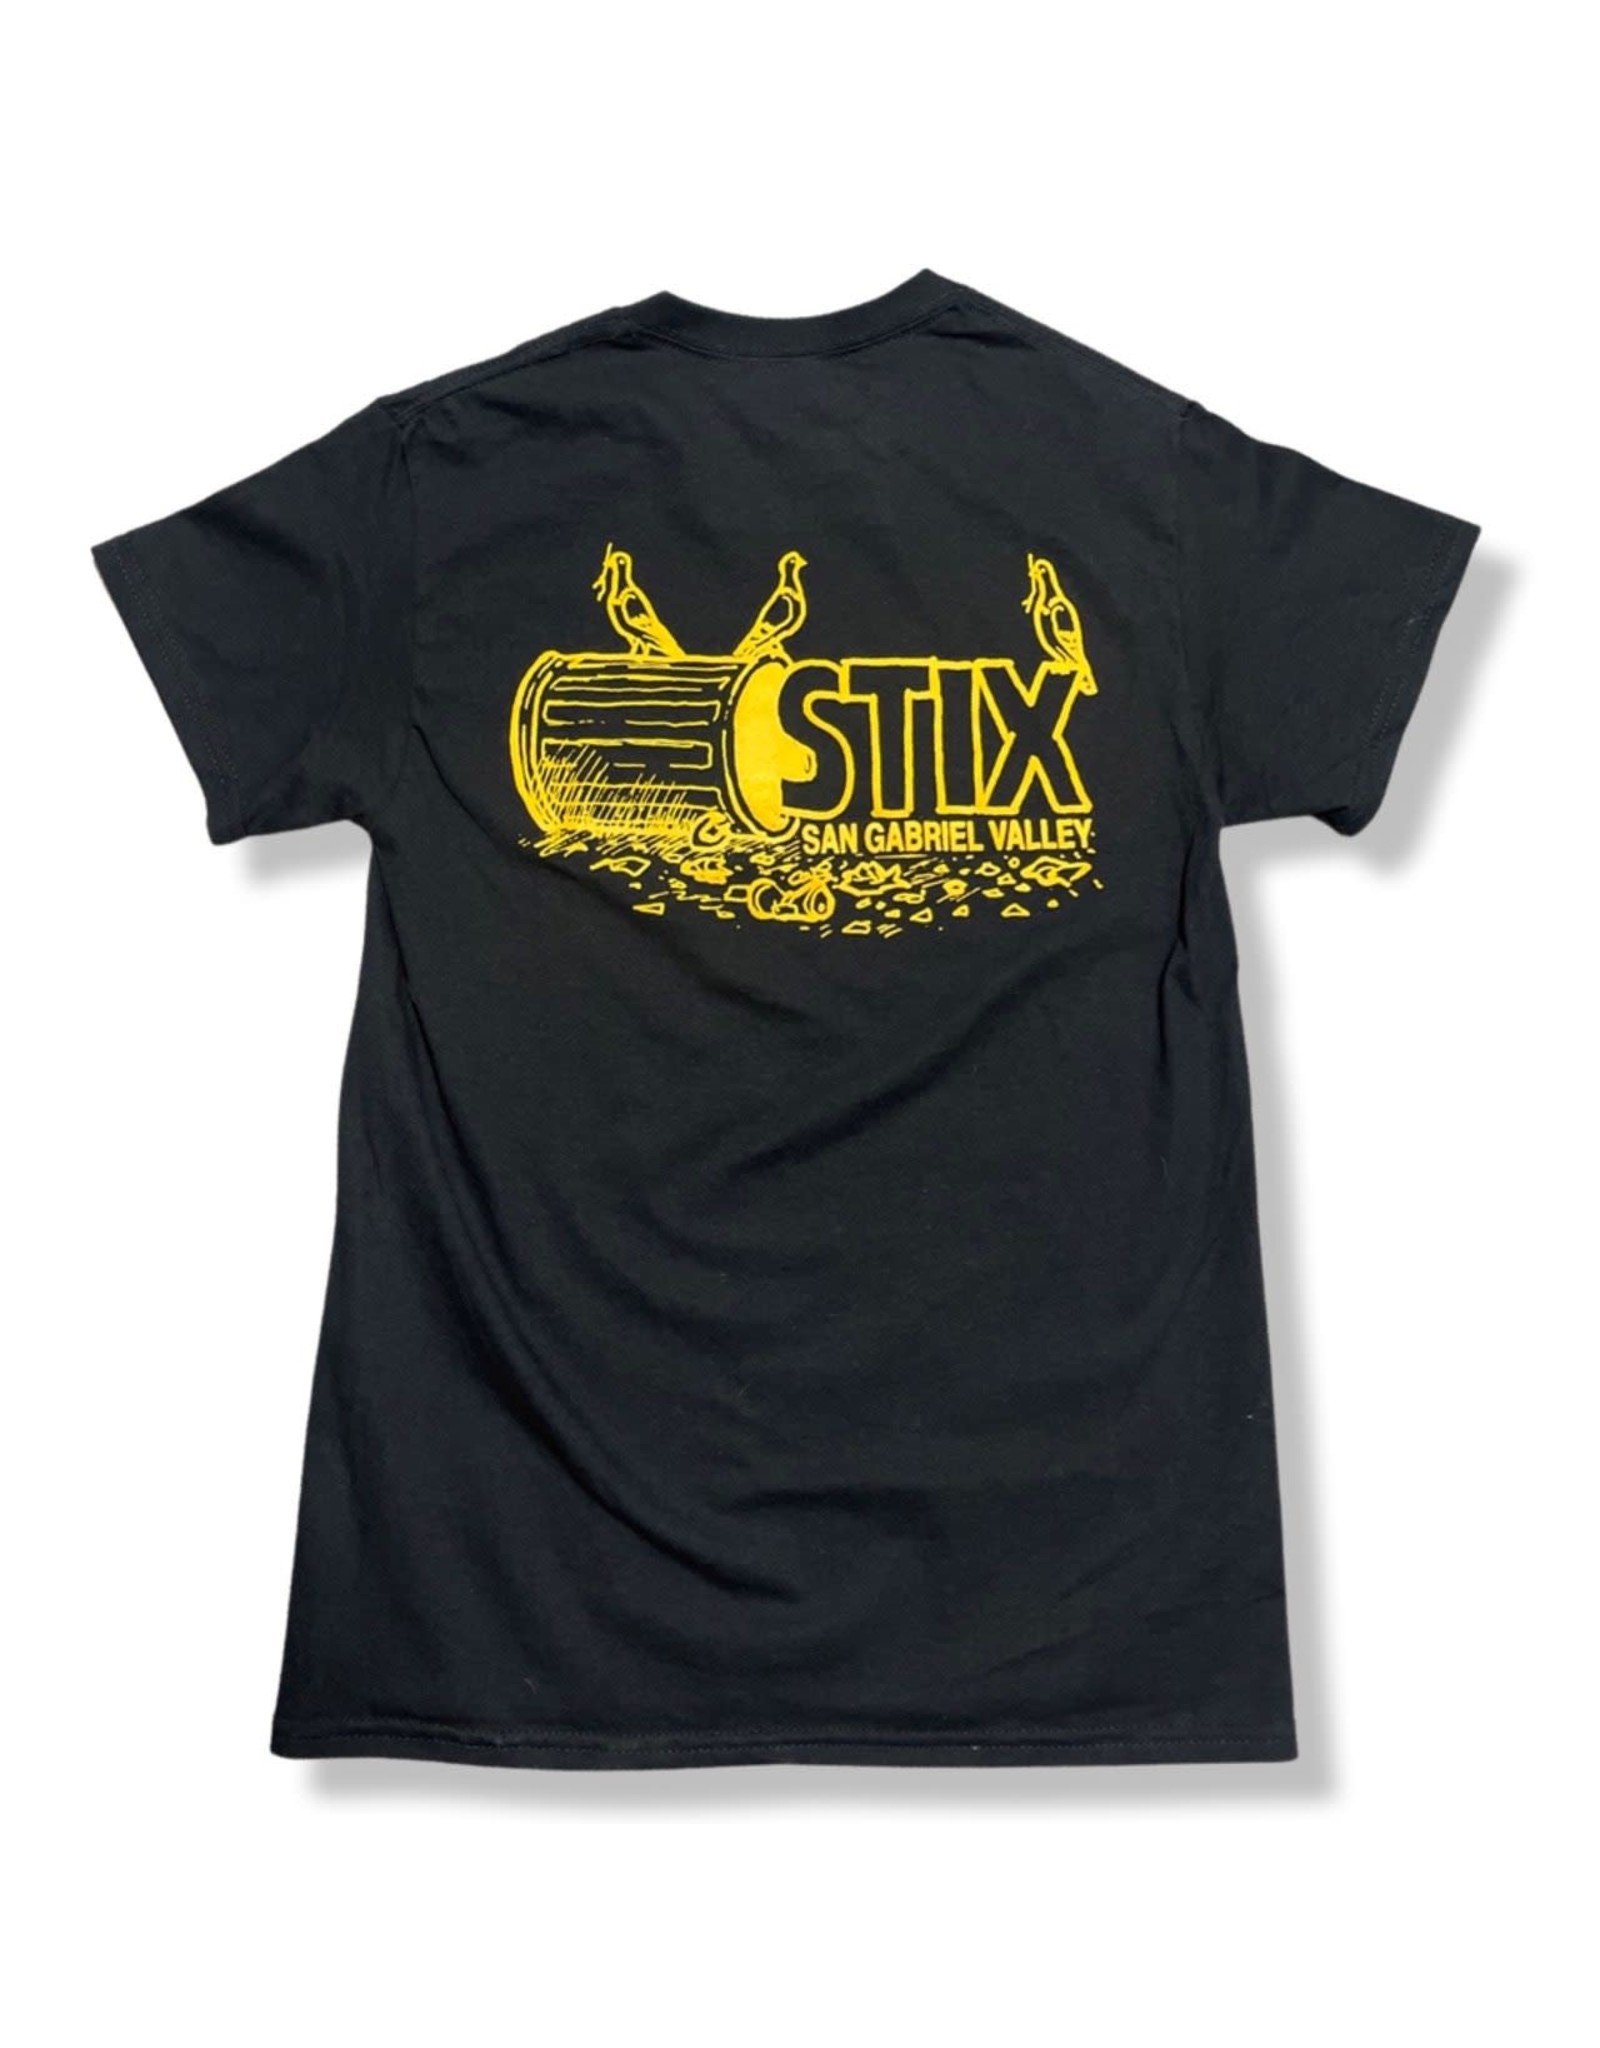 Stix SGV Stix Tee Todd Francis S/S (Black/Gold)